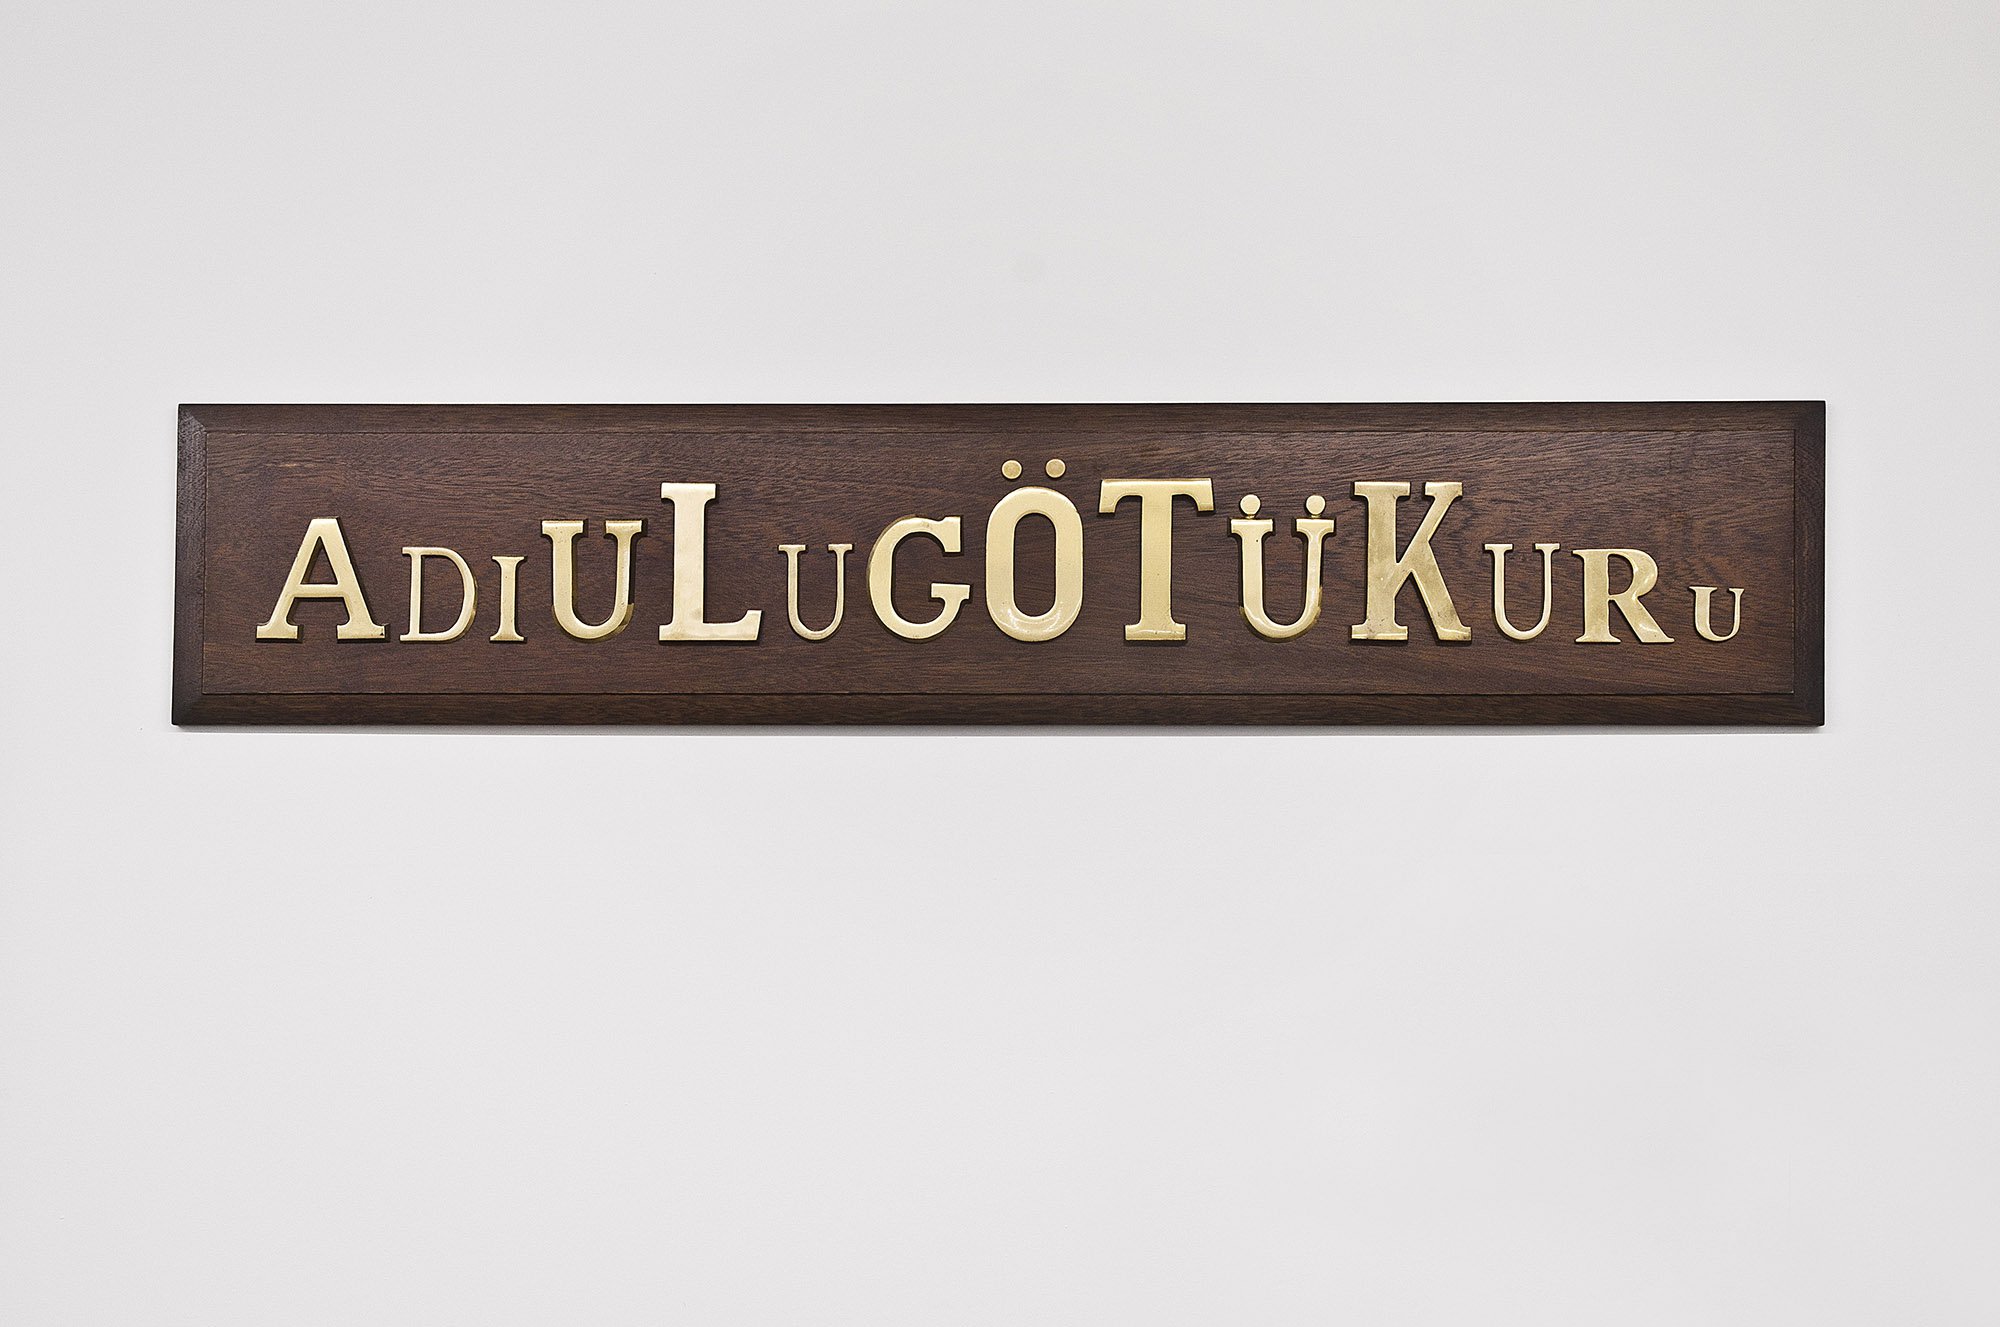 Banu Cennetoğlu, Adı Ulu Götü Kuru (great name dry ass), bronze letters on wood, 150 x 30 cm (59 x 11 3/4 in), 2010. Installation view, SAMPLE SALE / 2010 BC, Rodeo, Istanbul, 2010